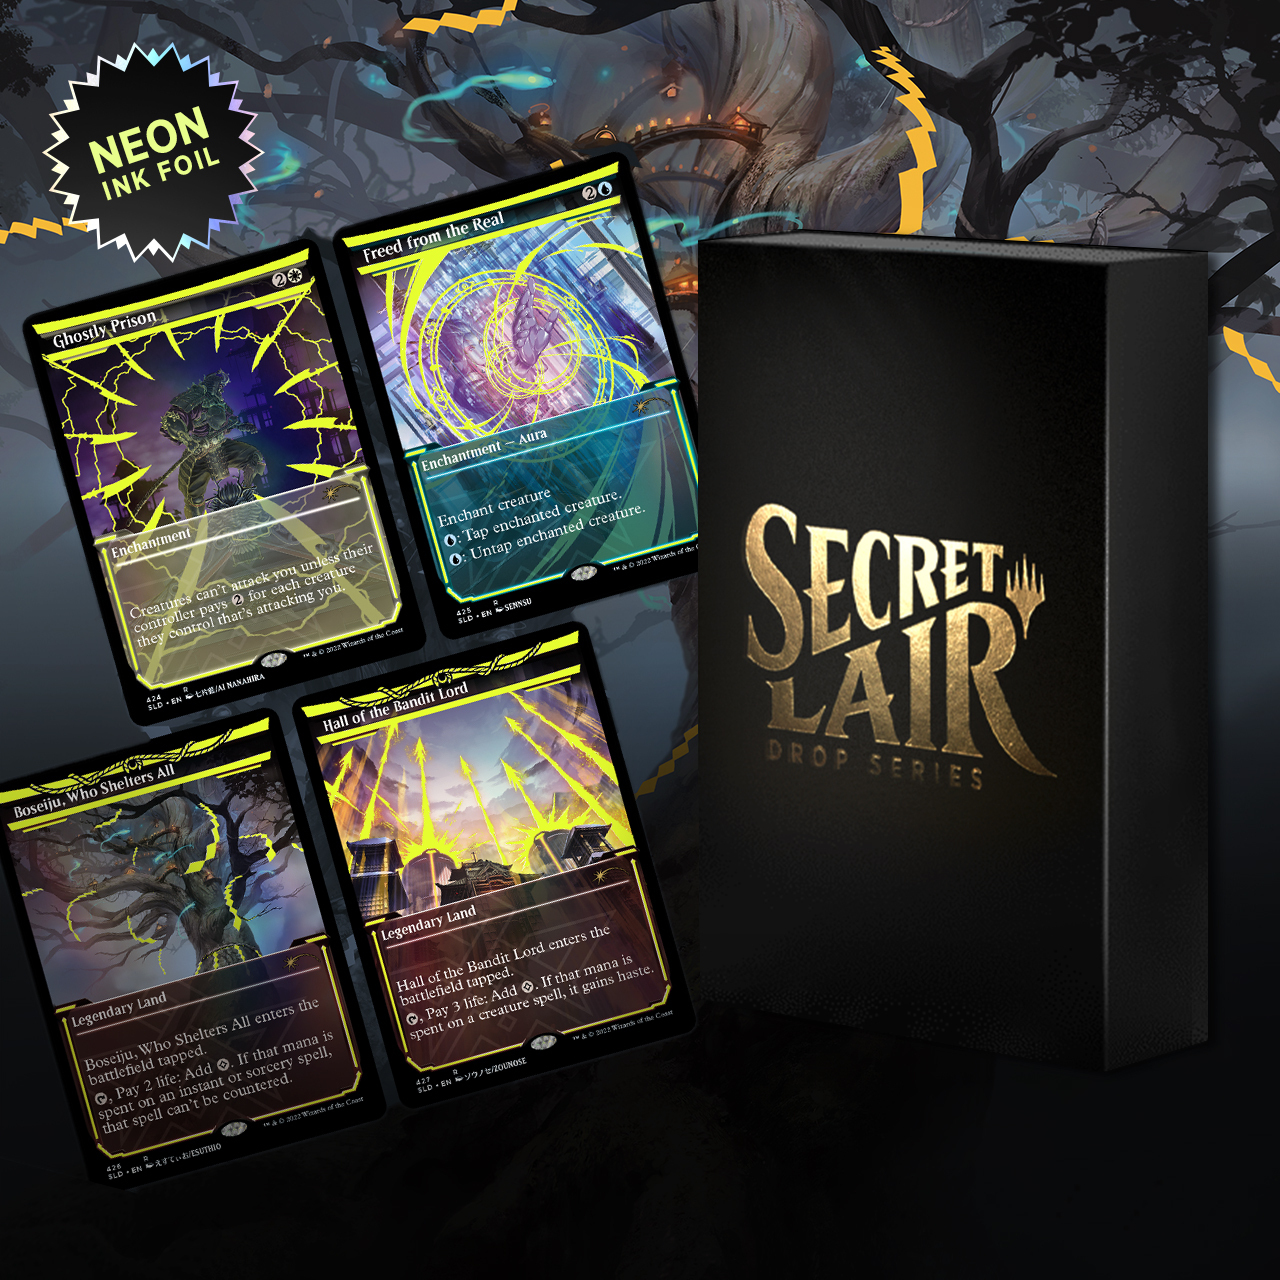 Secret Lair Drop Series: Showcase - Neon Dynasty Secret Lair Drop Series |  Magic | CardTrader